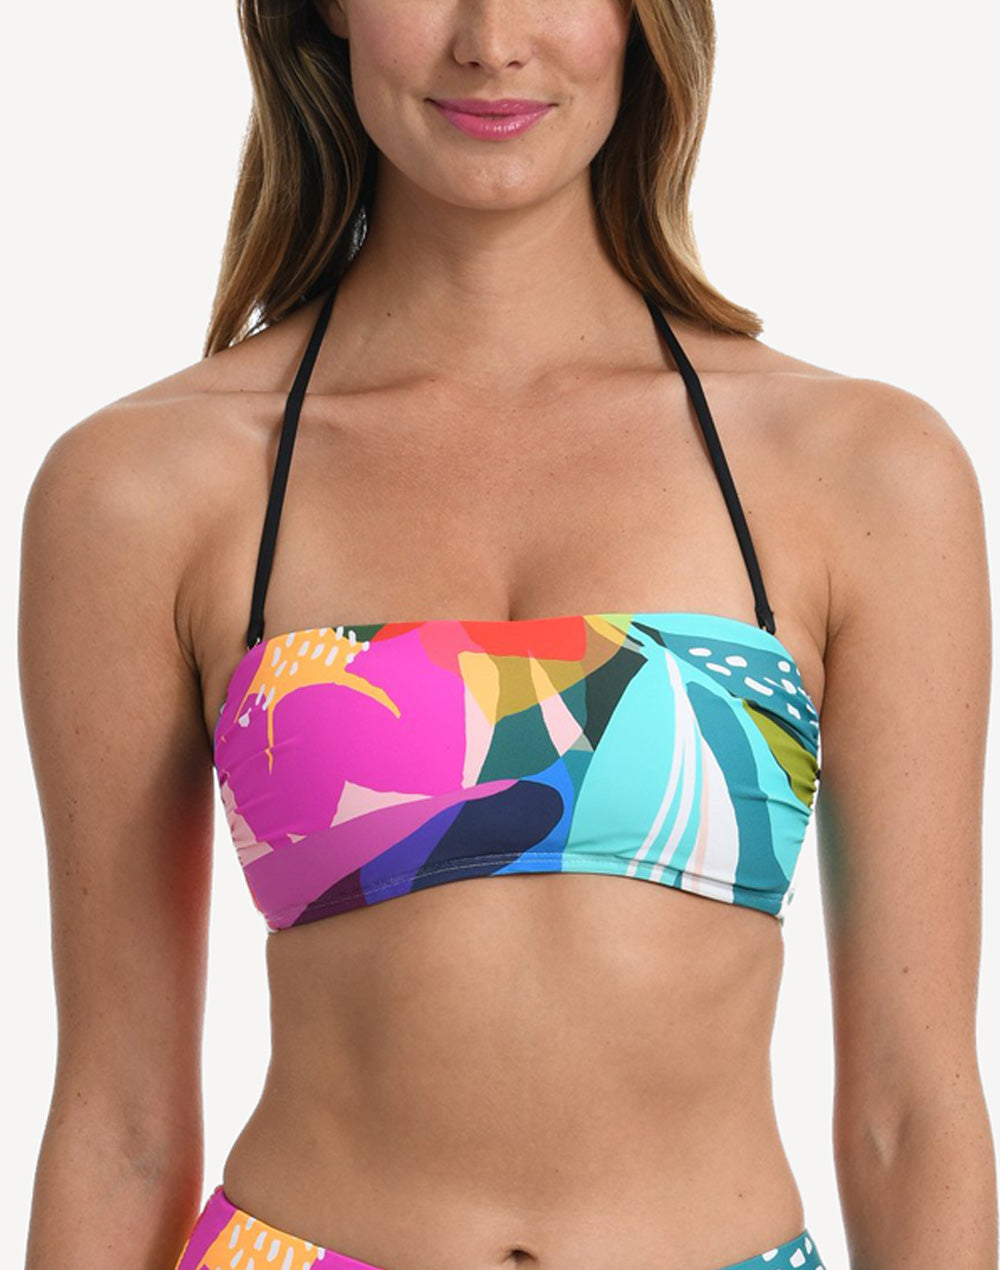 Eclectic Shore Bandeau Bikini Top#color_eclectic-shore